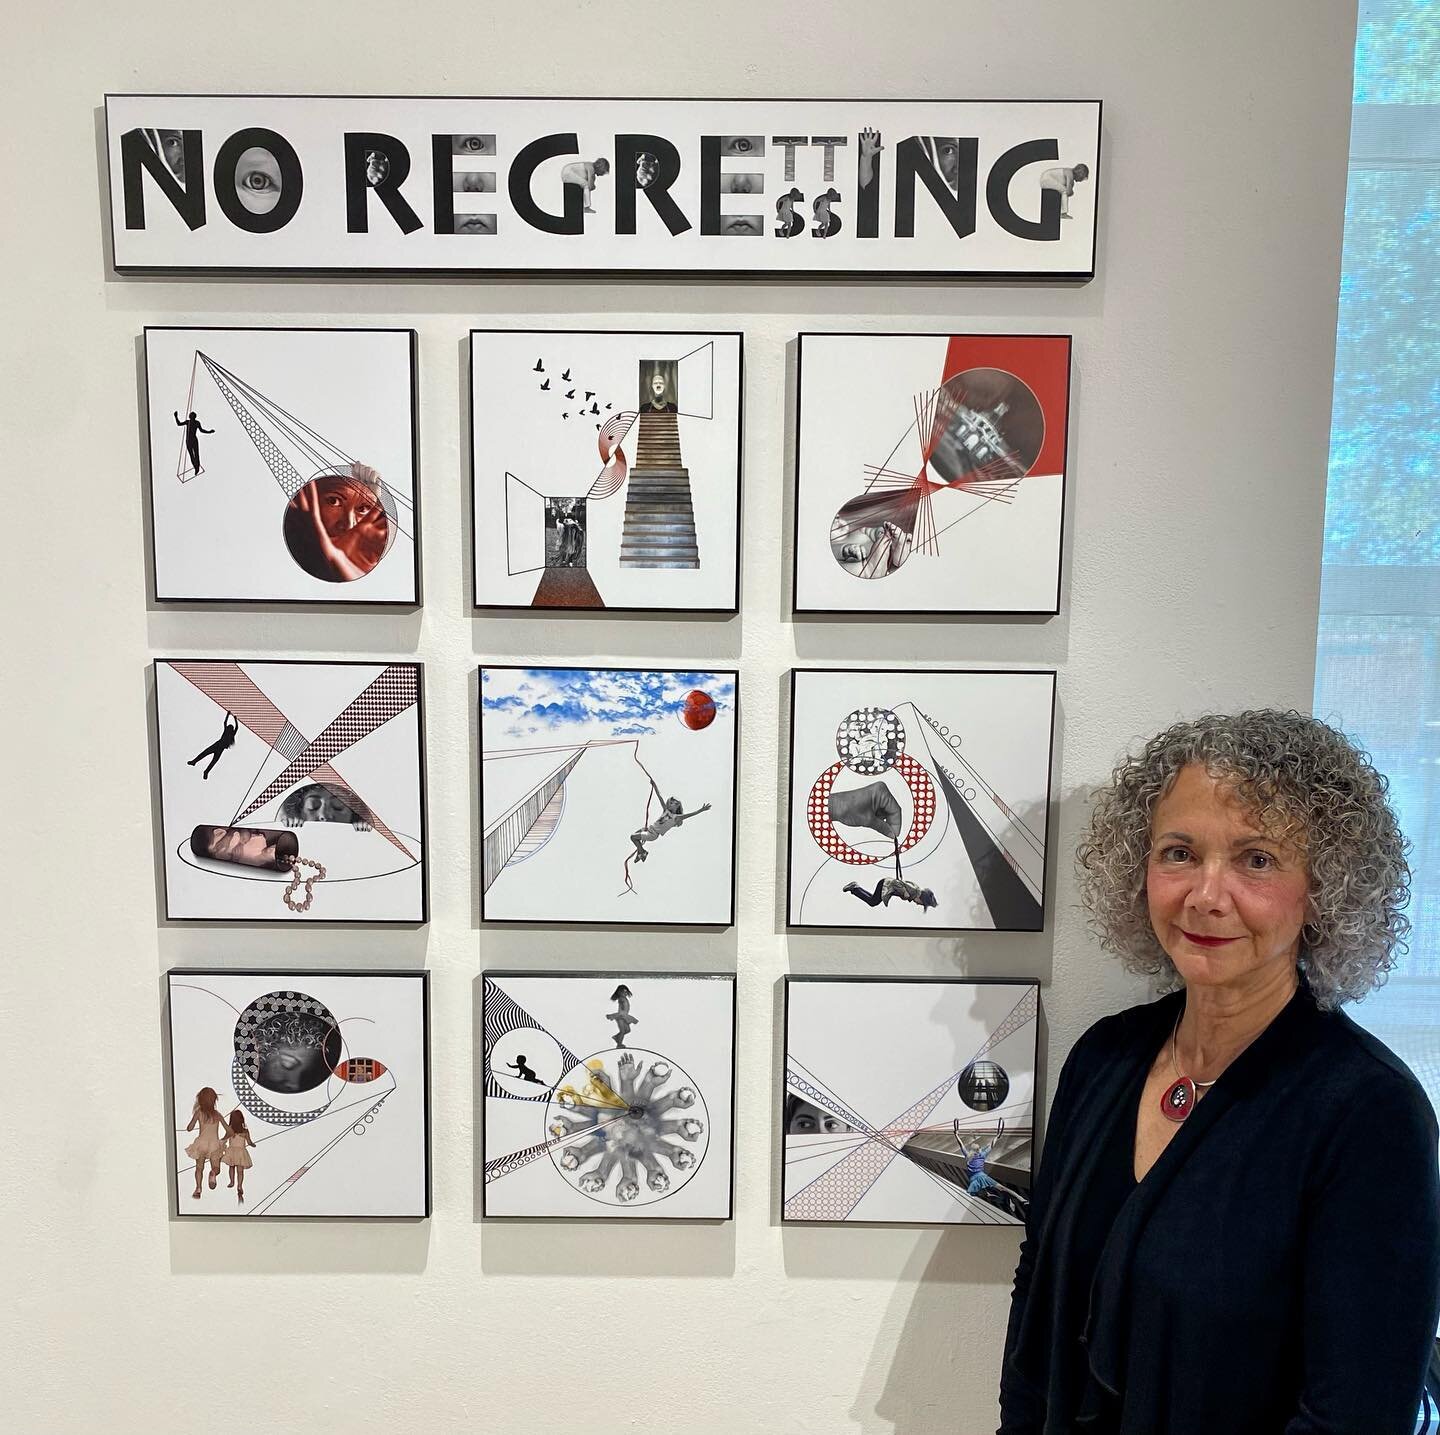 No Regretting; No Regressing!
 
This series is on exhibit at @theartcenterhp until August 5. 

#digitalart #digitalcollage #fotoplastik #bauhaus #chicagophotographicartssociety #artmill #standforsomething #dadaism